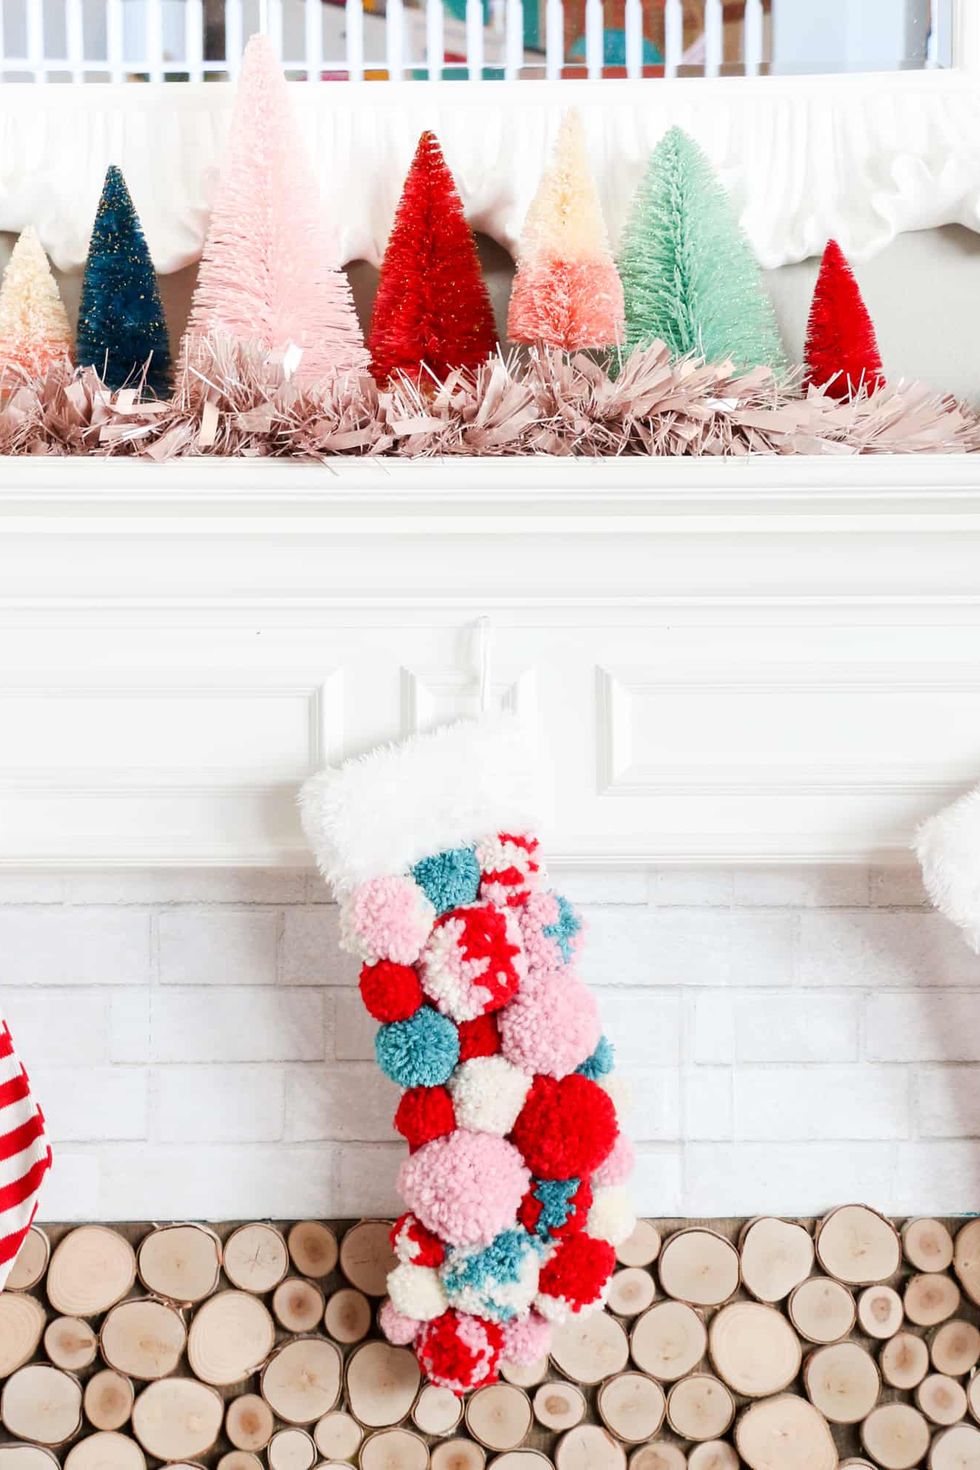 How to Make Homemade Christmas Stockings - DIY Gift Idea